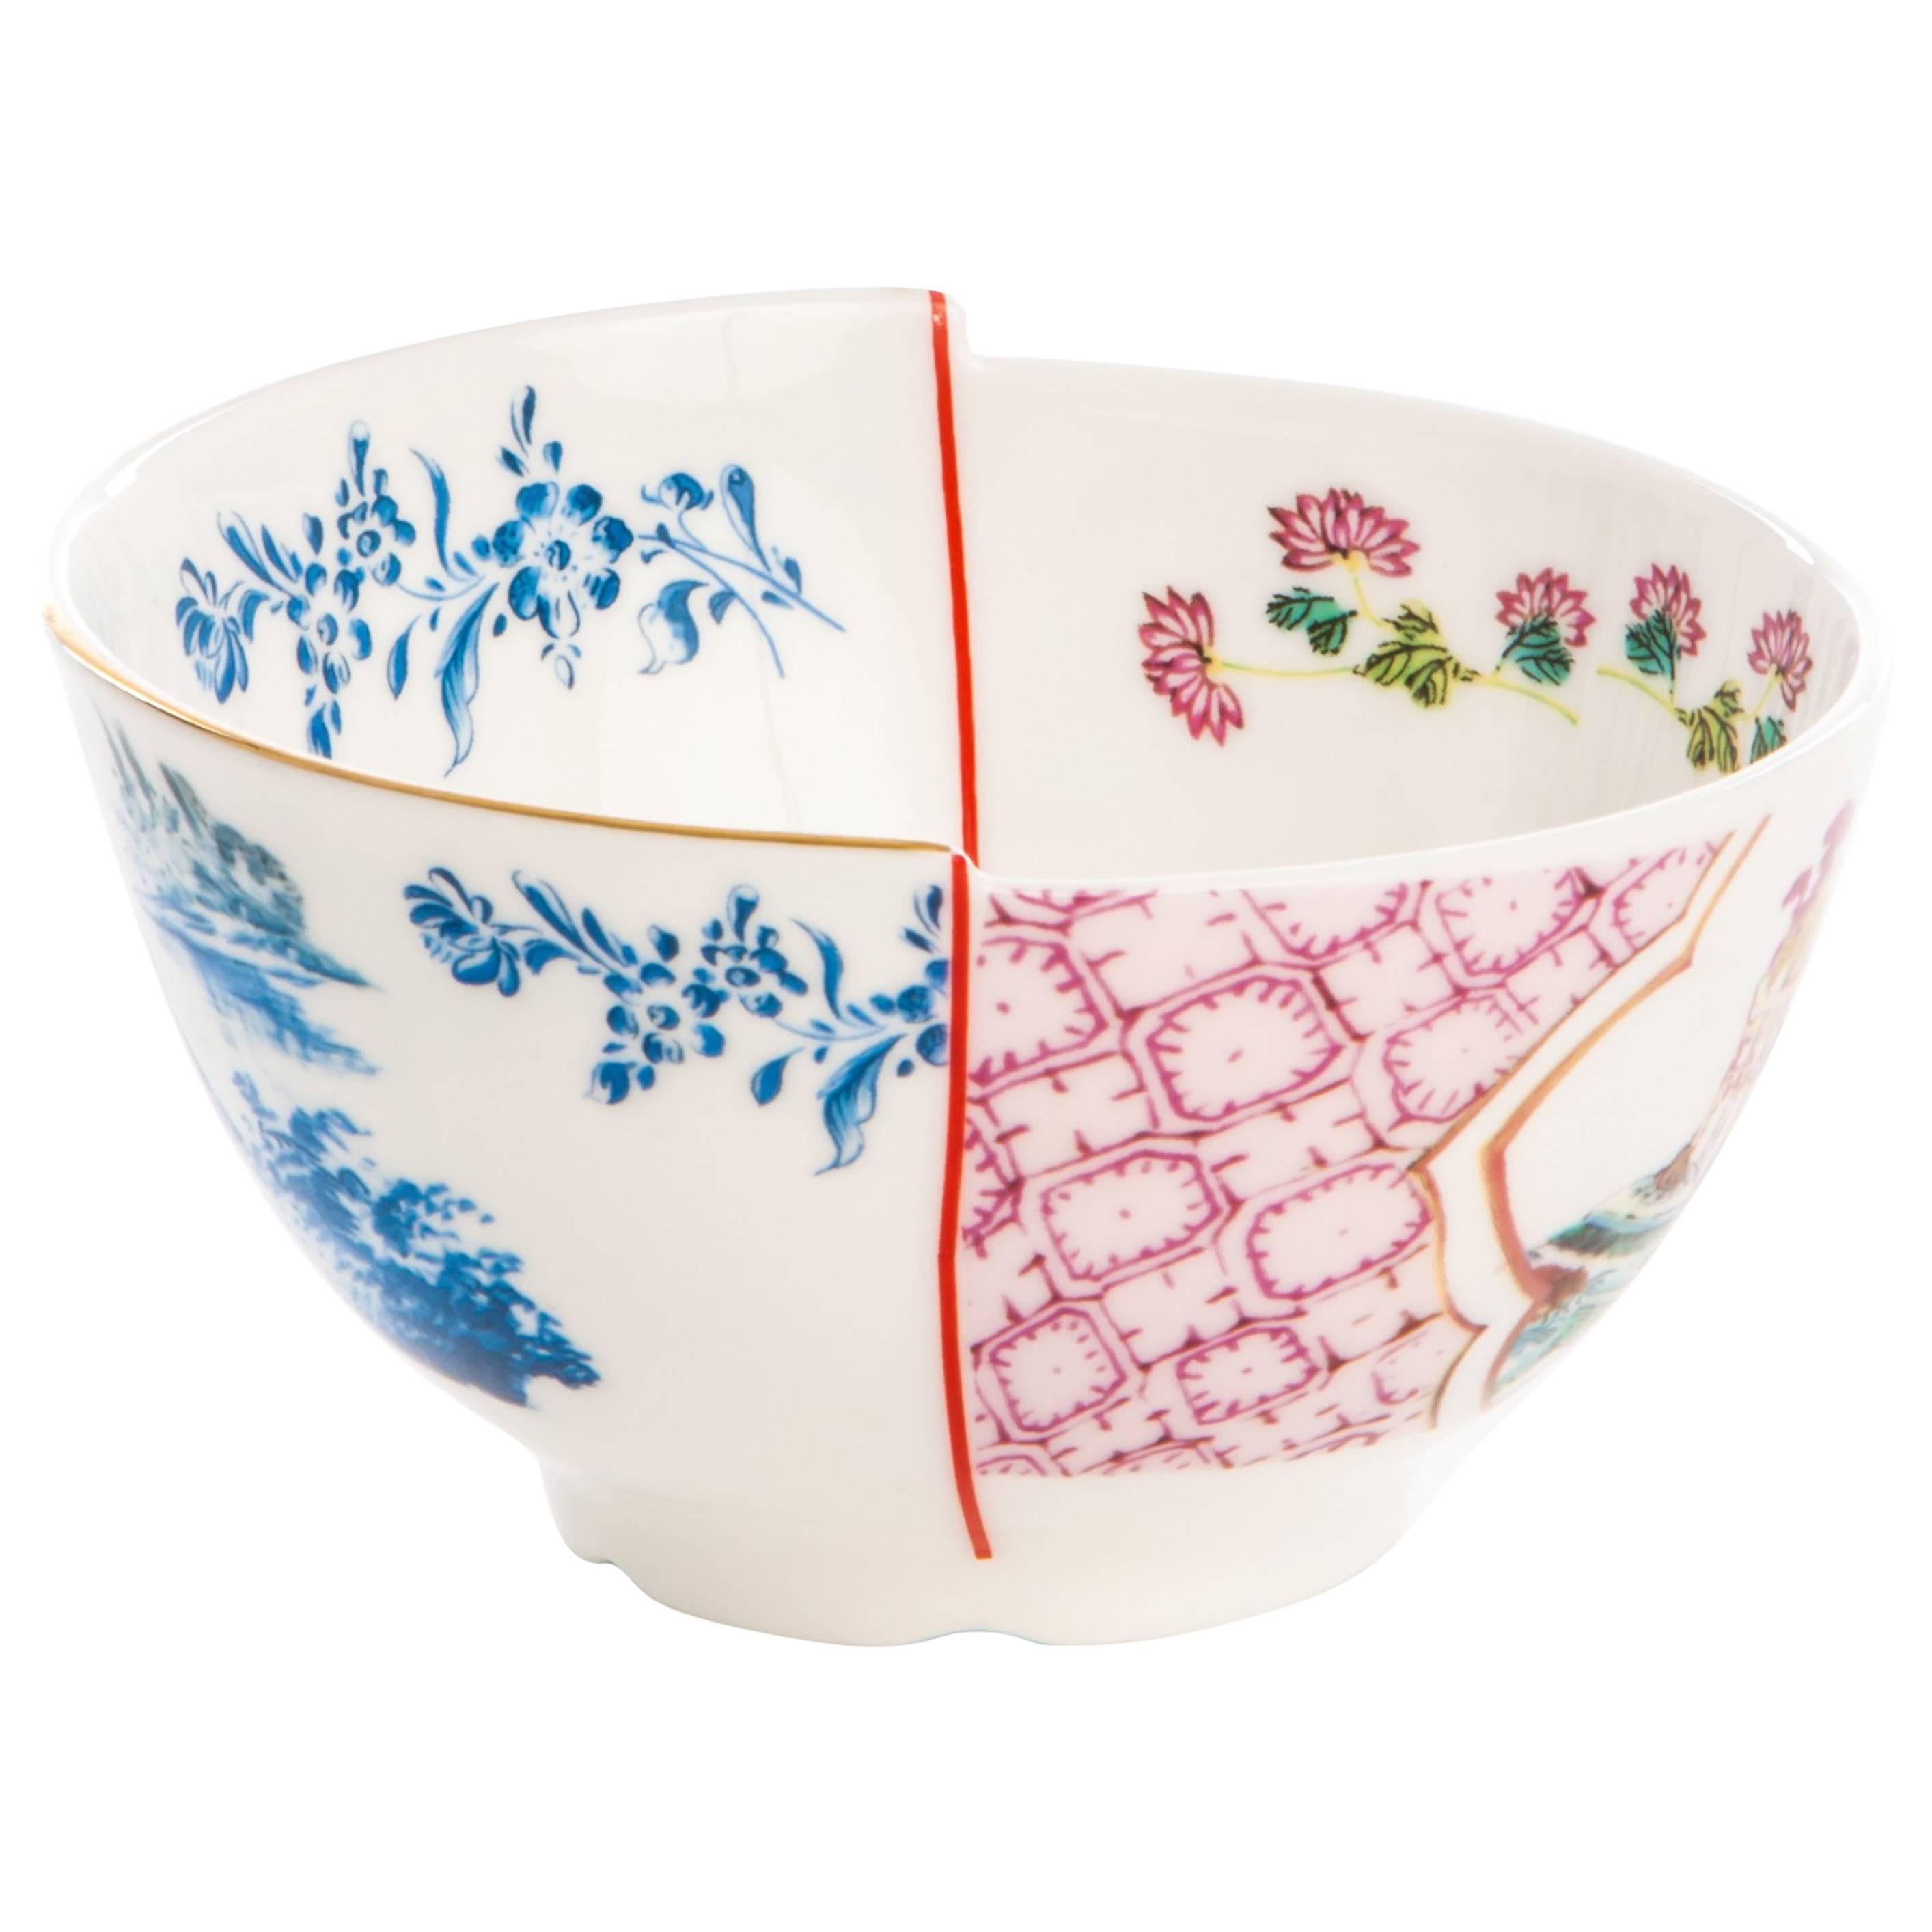 Seletti "Hybrid-Cloe" Porcelain Fruit Bowls For Sale